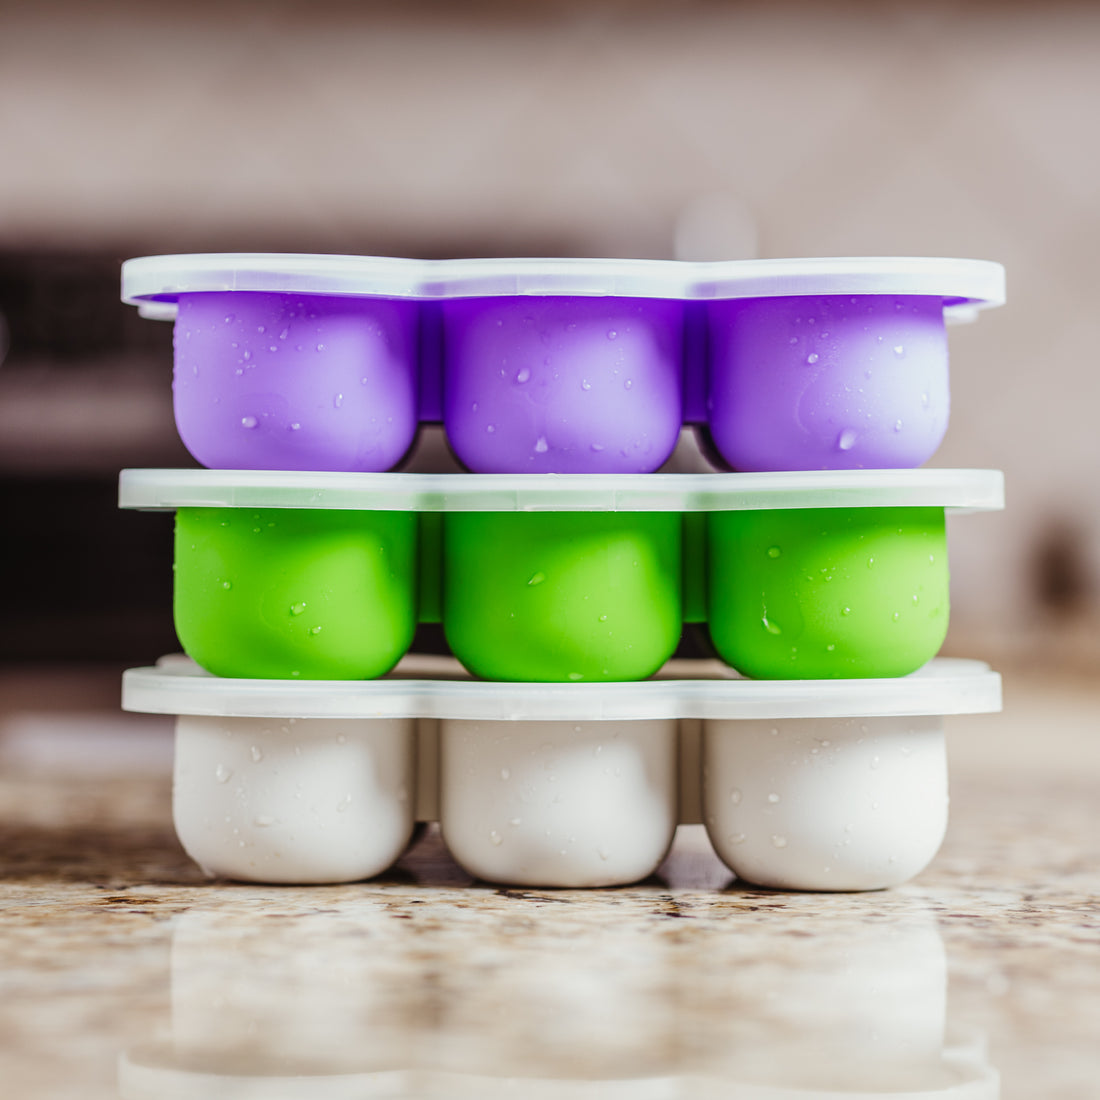 Pureed Baby Food Ice Cube Trays Ready Freezing Stock Photo by ©ellinnur  521361552